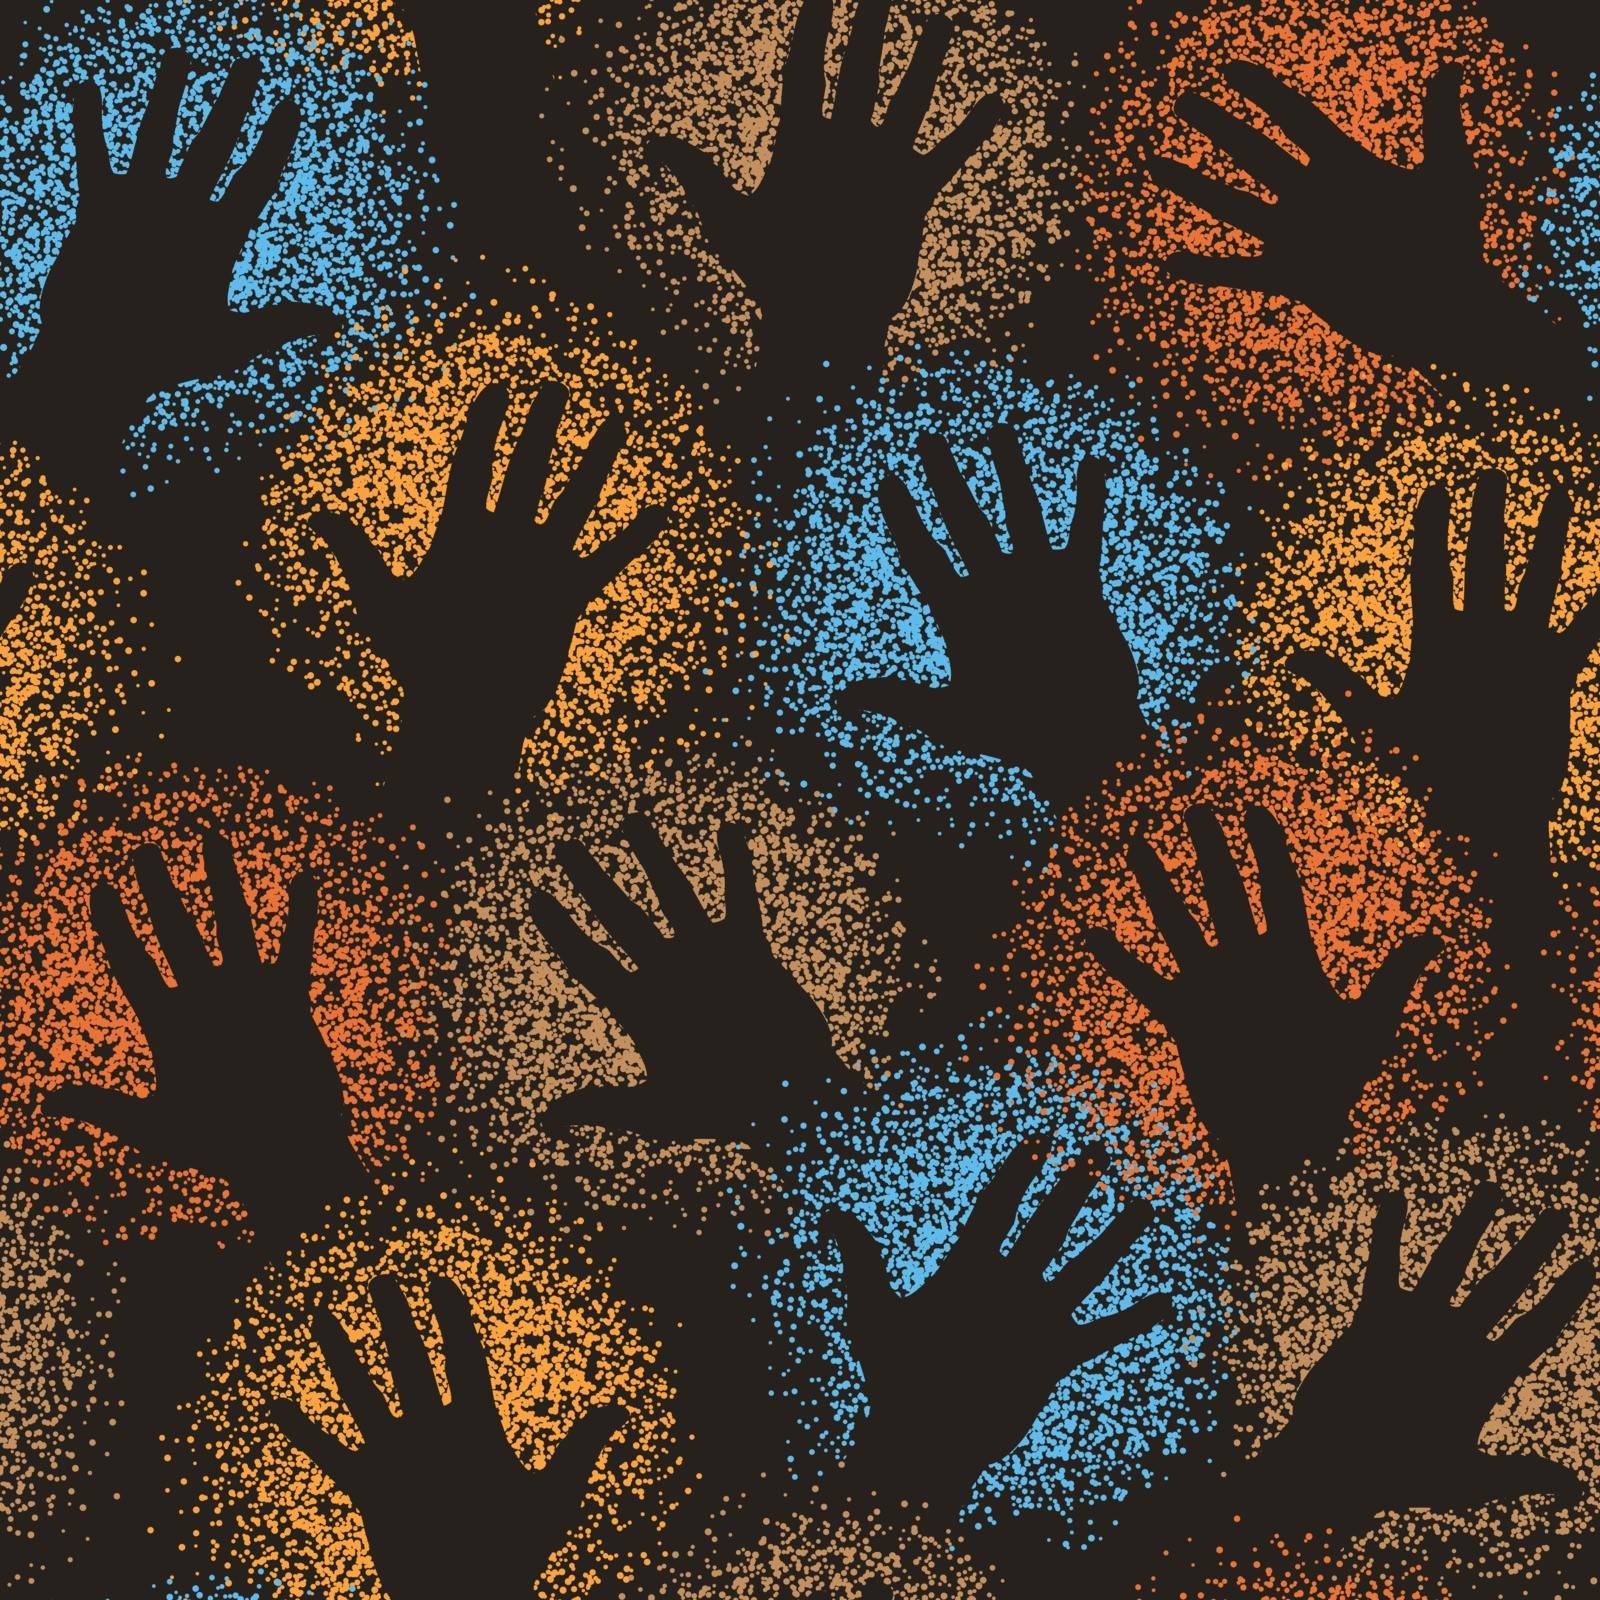 Editable vector seamless tile of cave art paint-sprayed hands